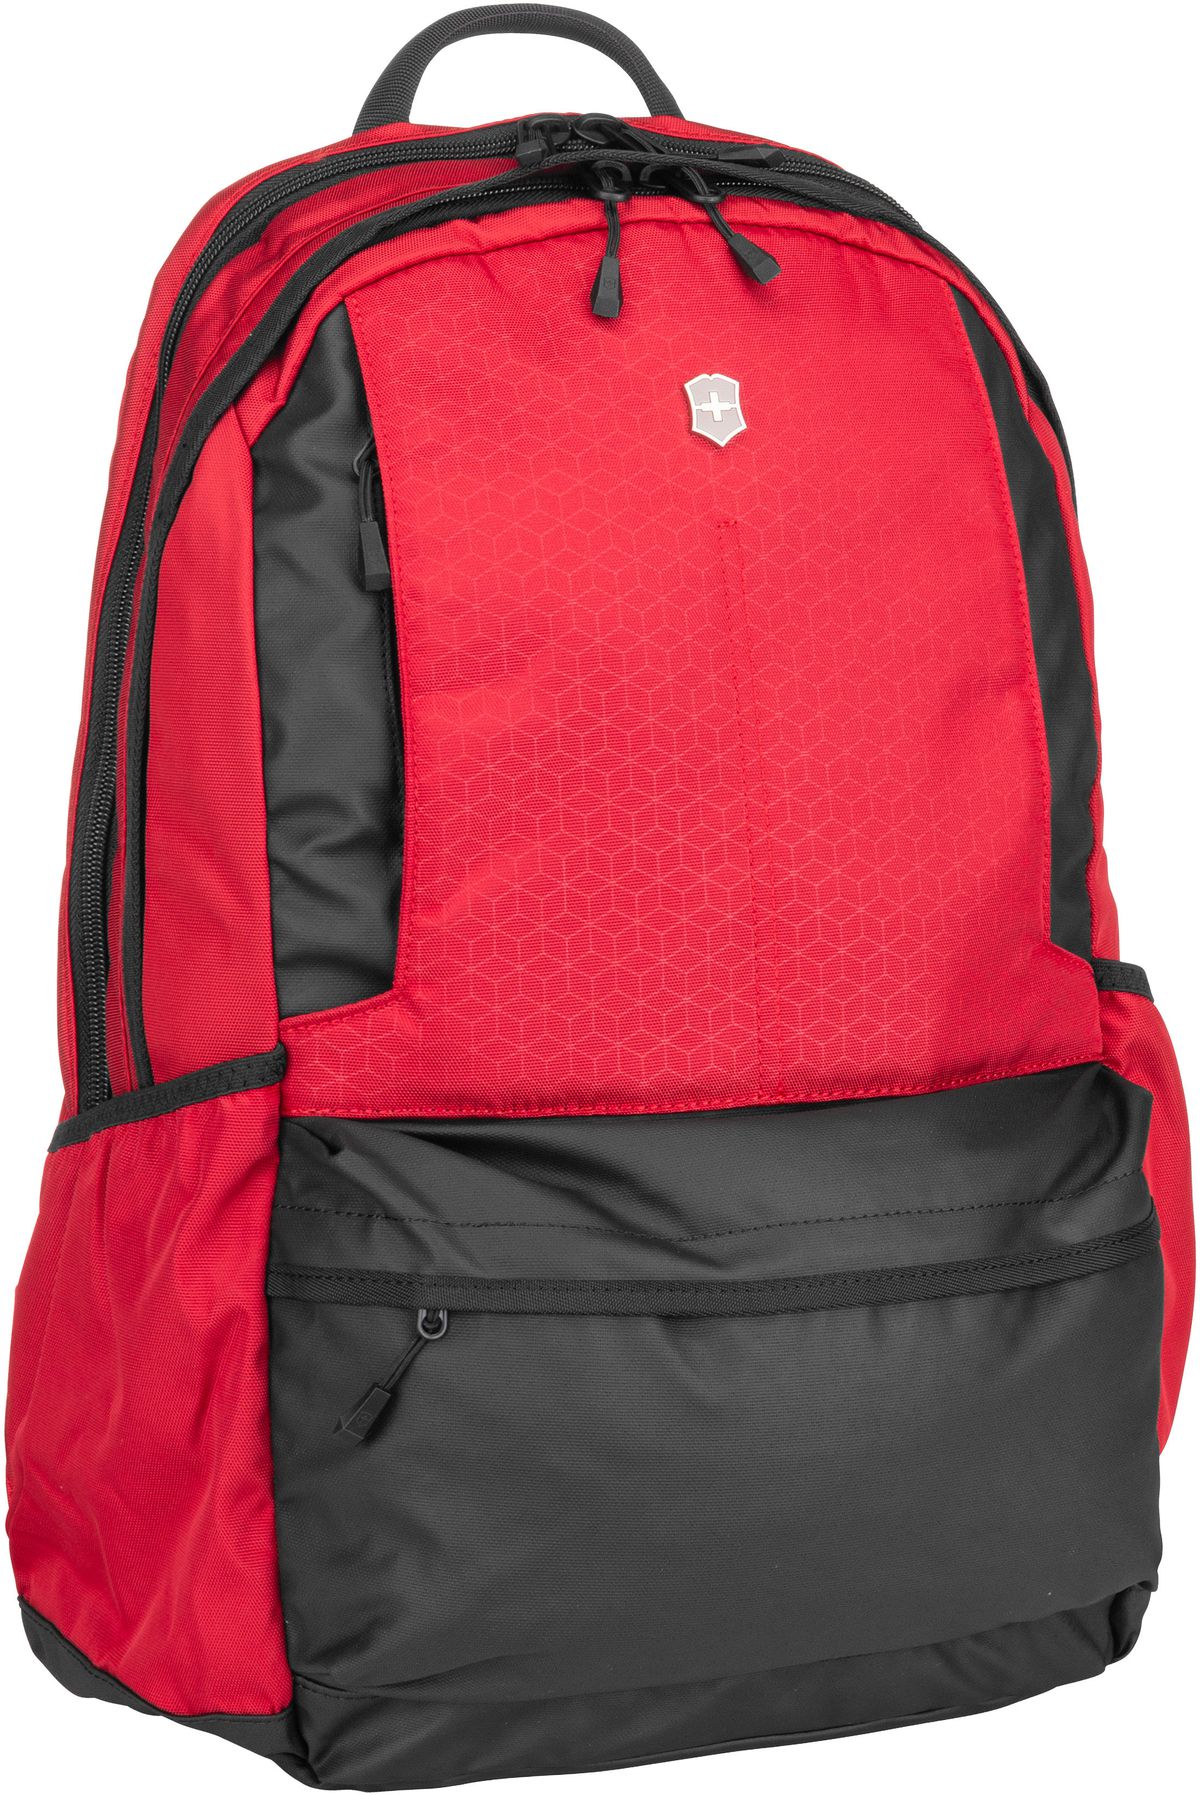 Victorinox Altmont Original Laptop Backpack  in Rot (22 Liter), Rucksack / Backpack